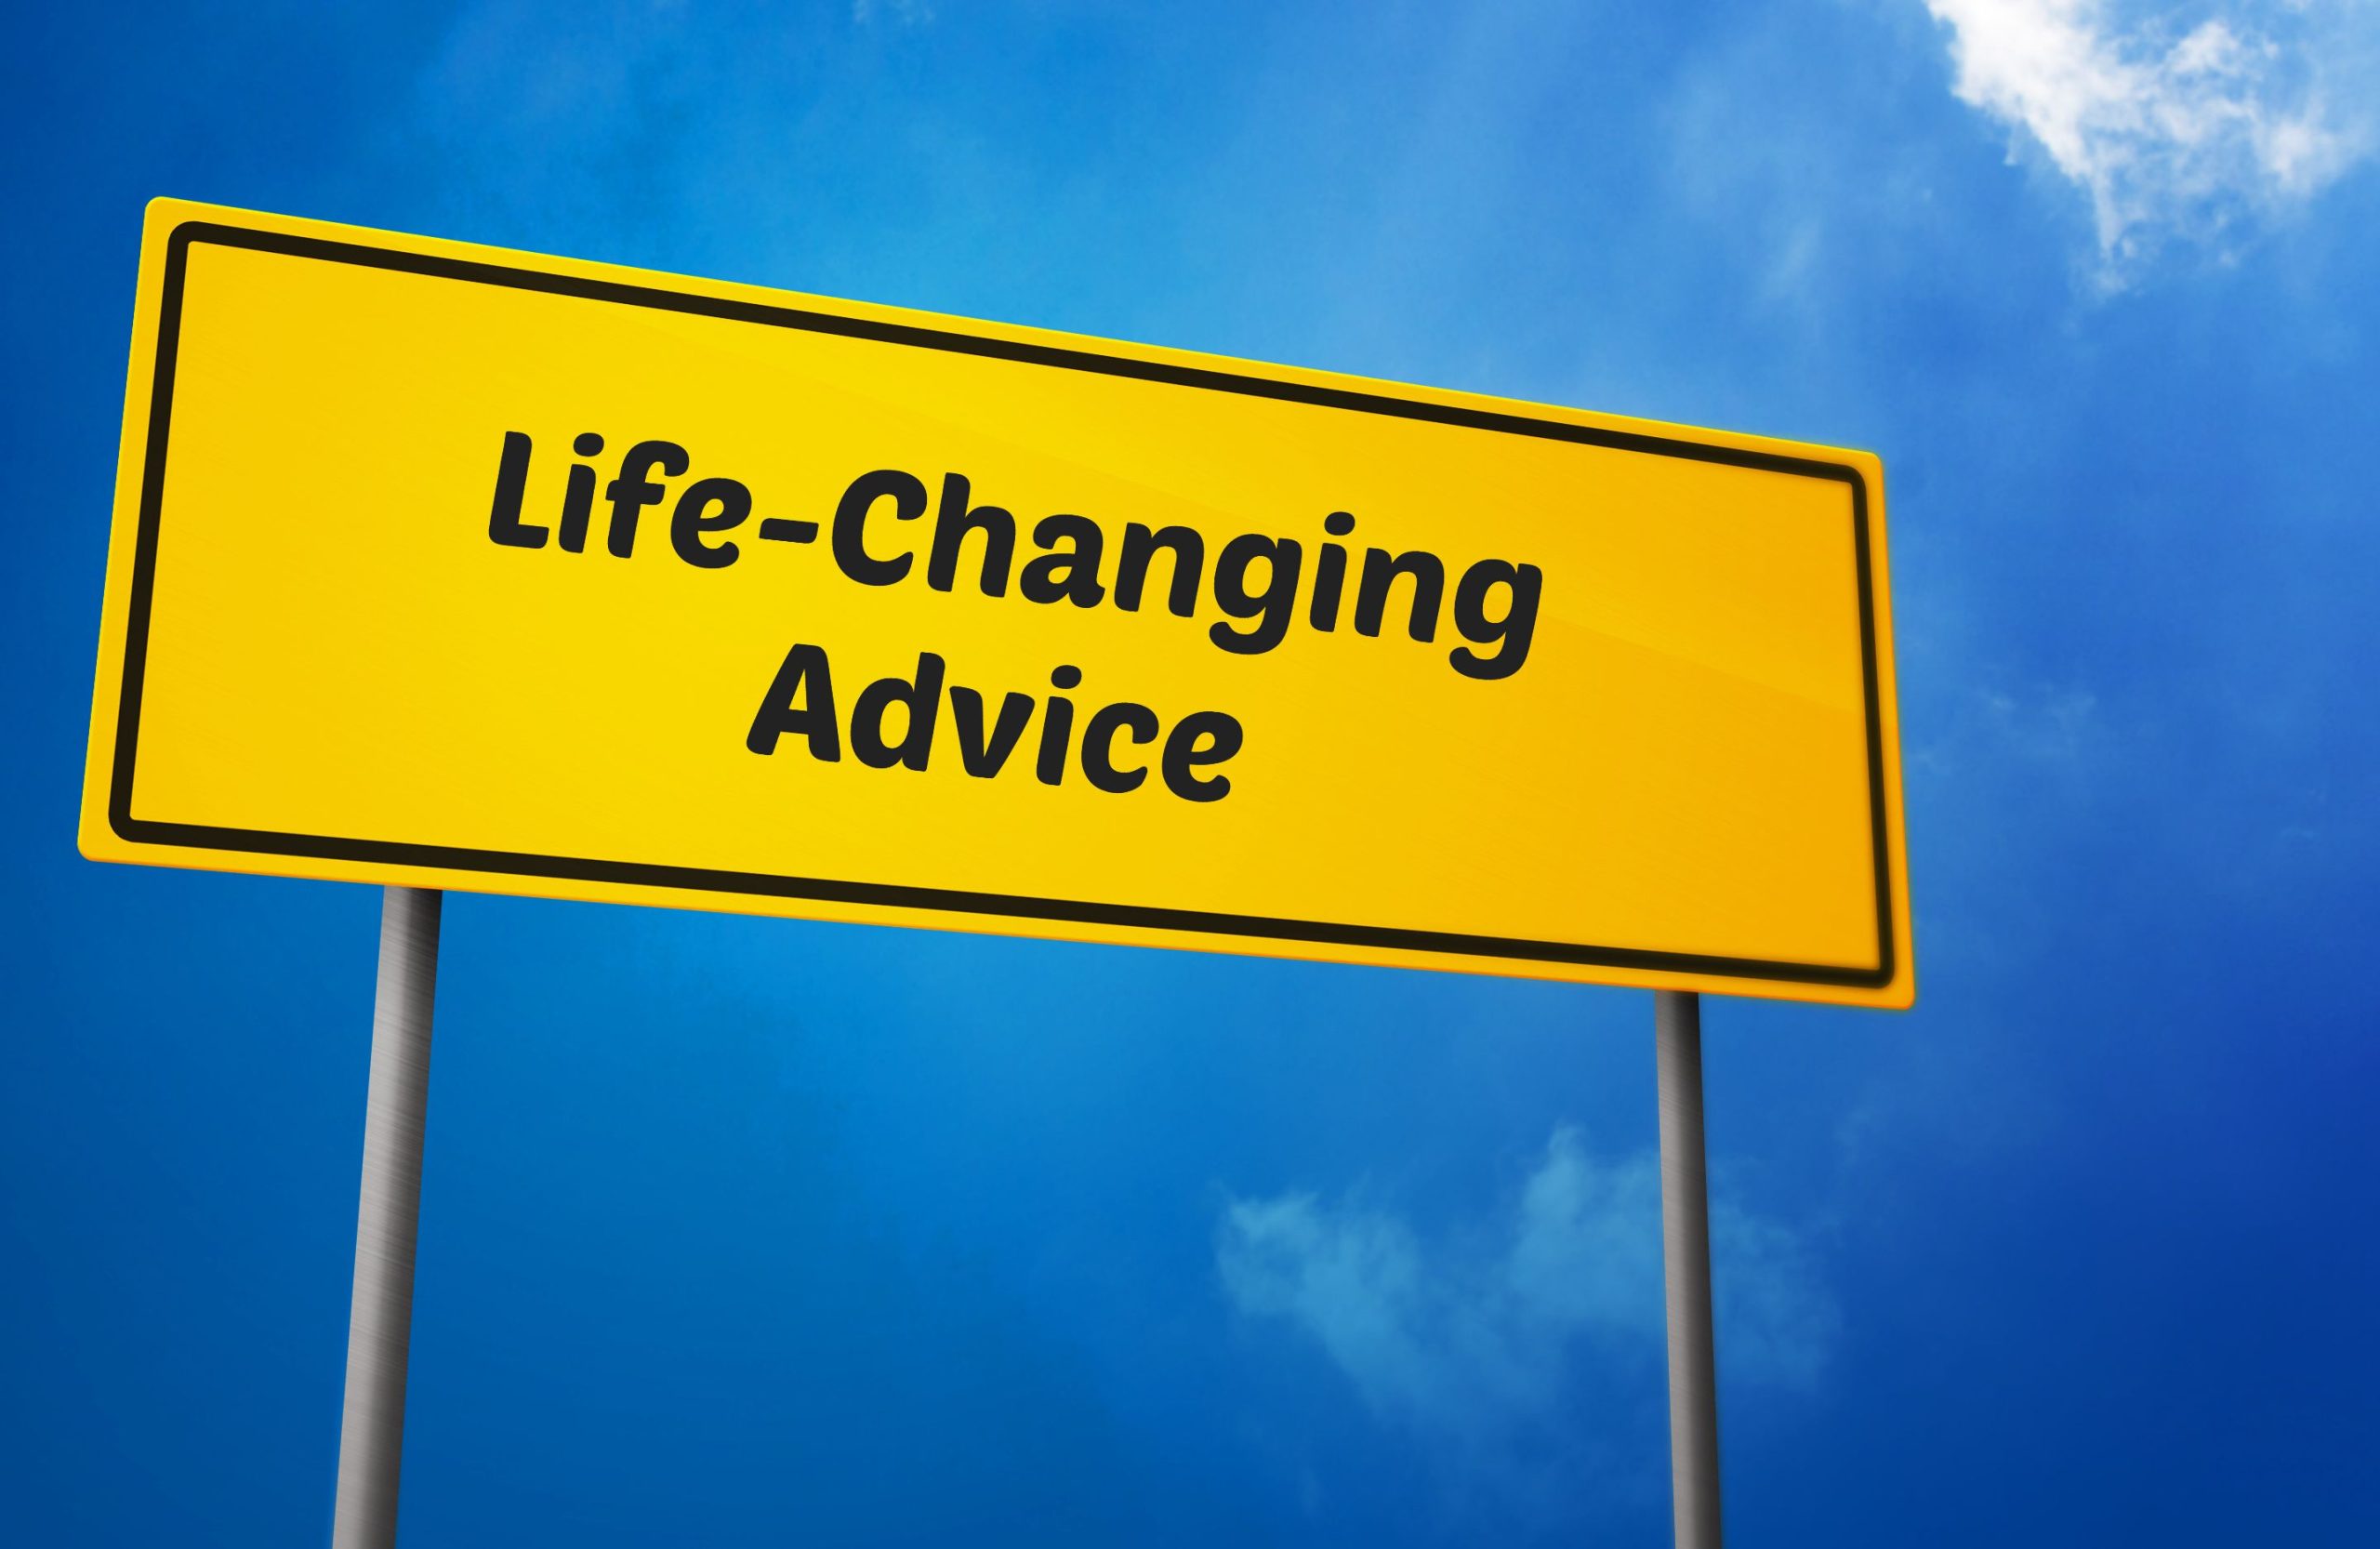 Life-Changing Advice